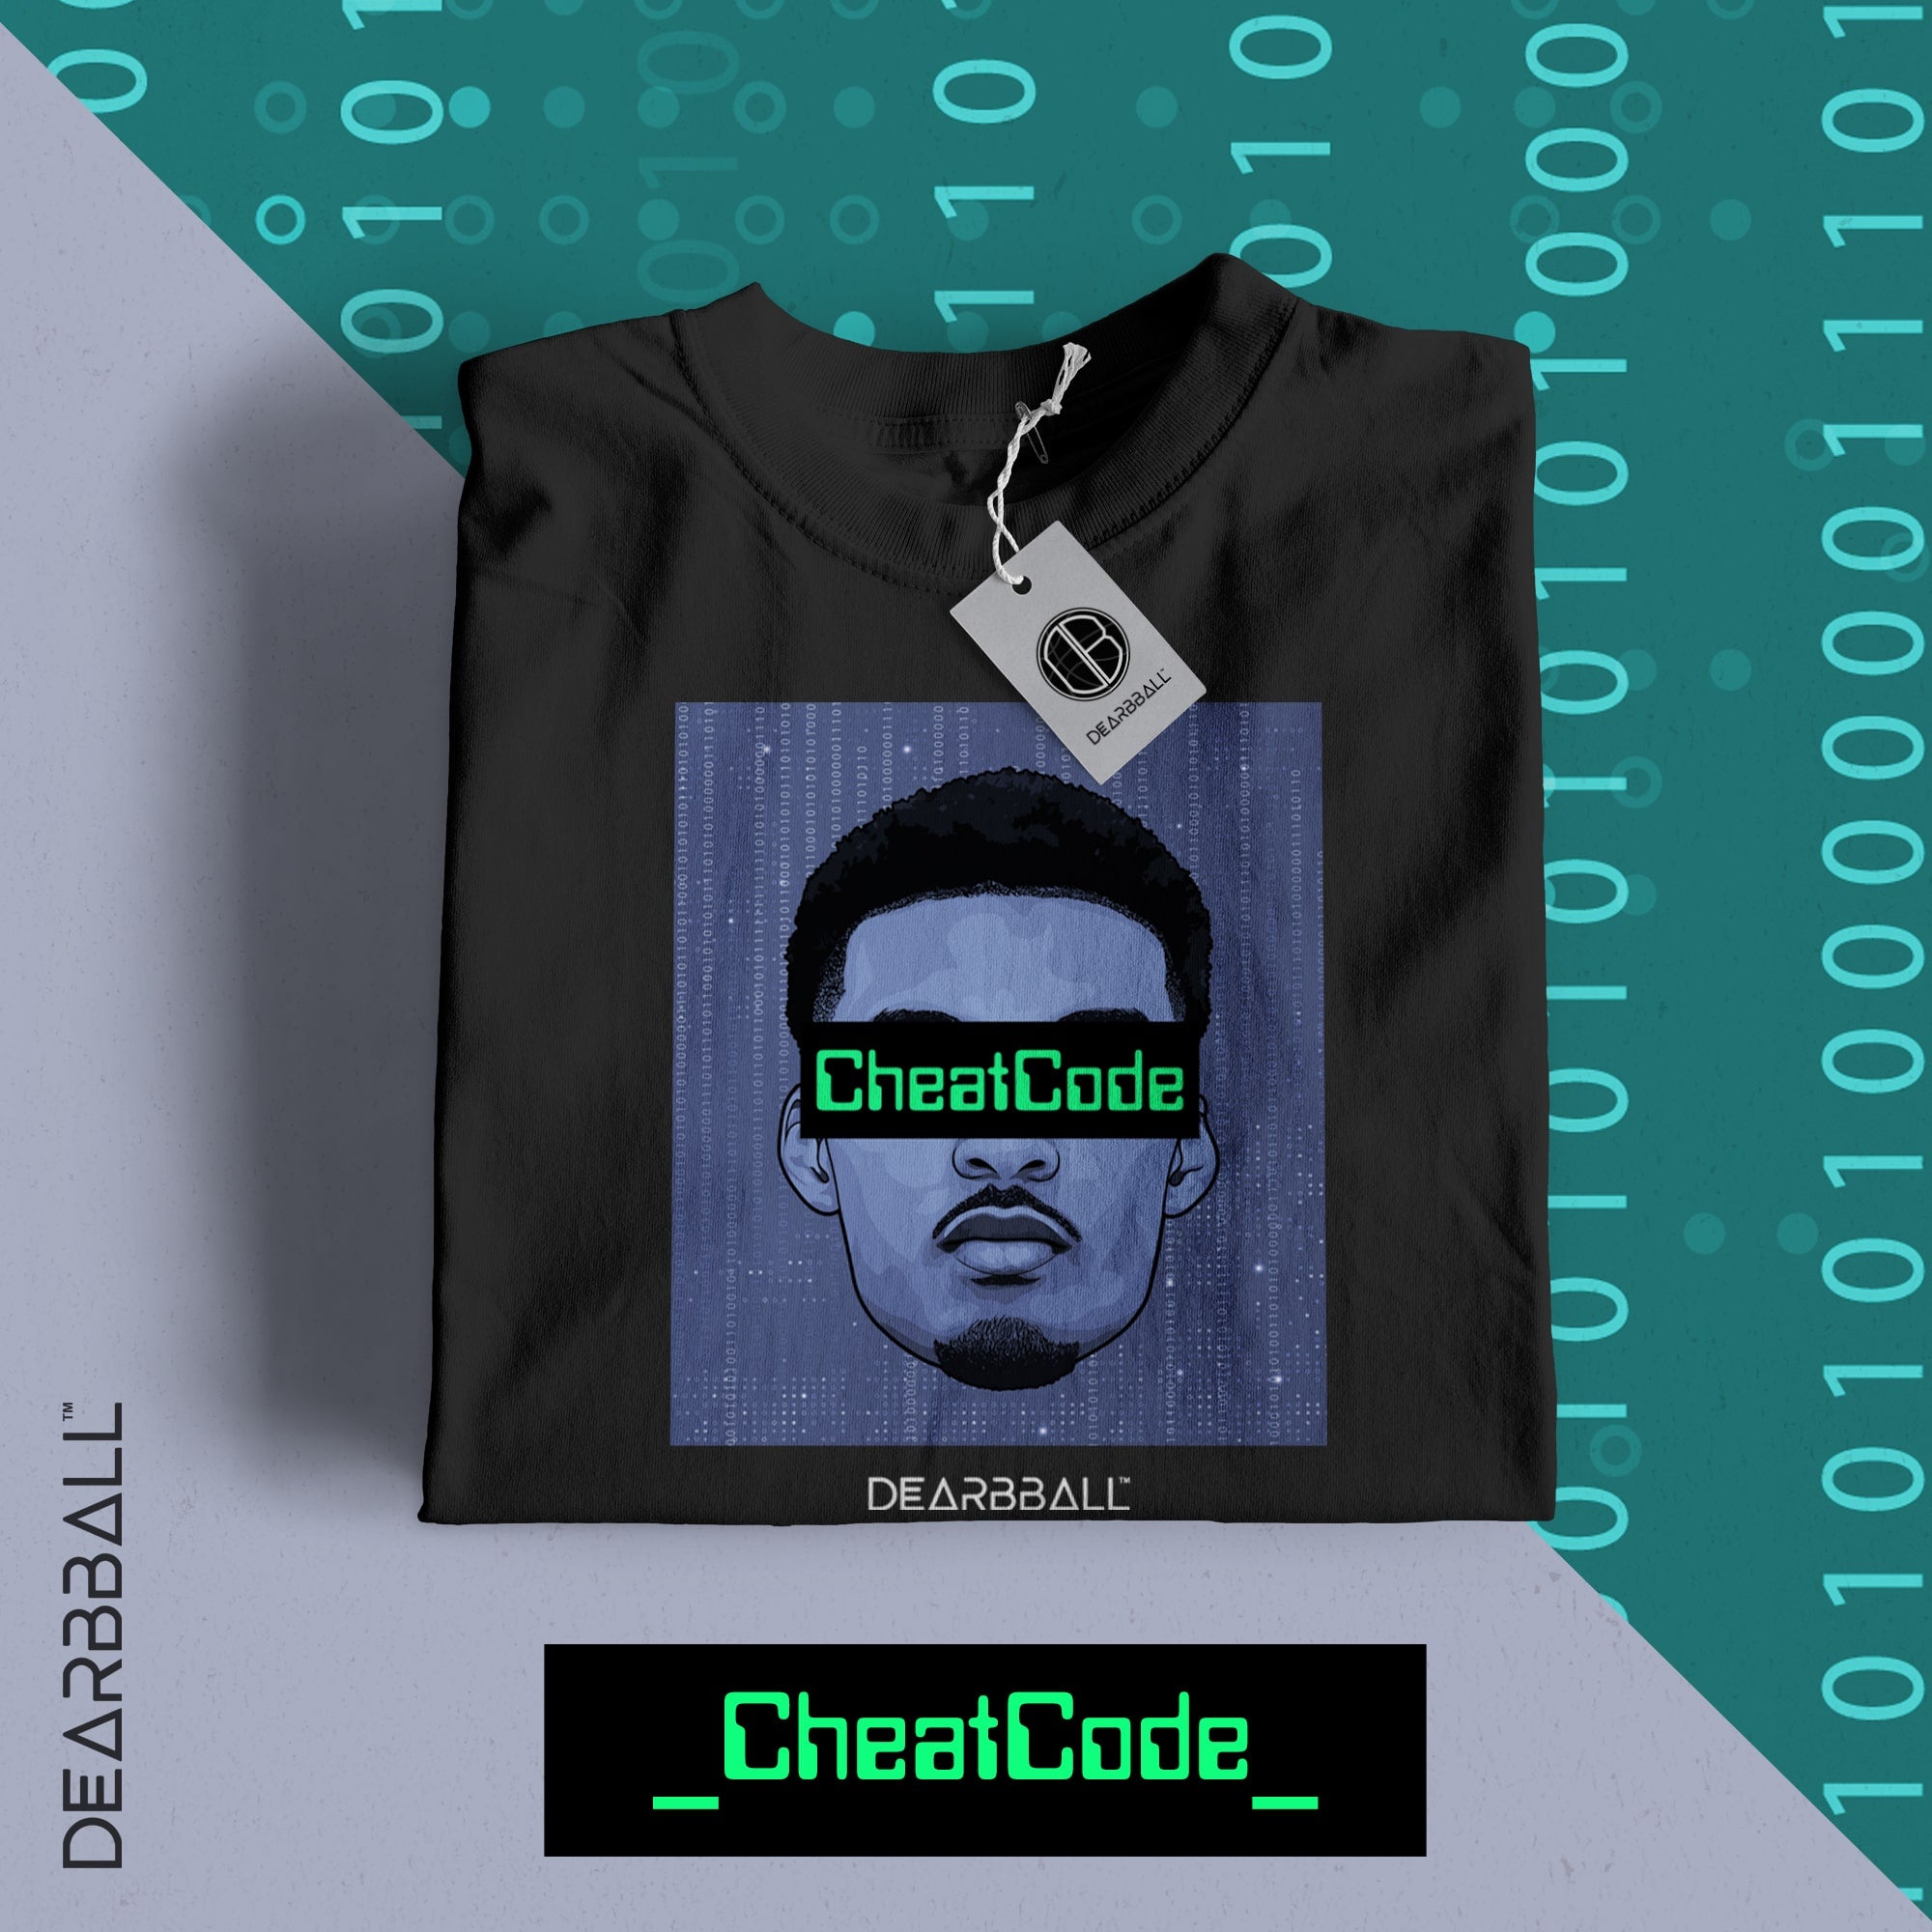 [ENFANT] DearBBall T-Shirt - CheatCode Edition Limitée